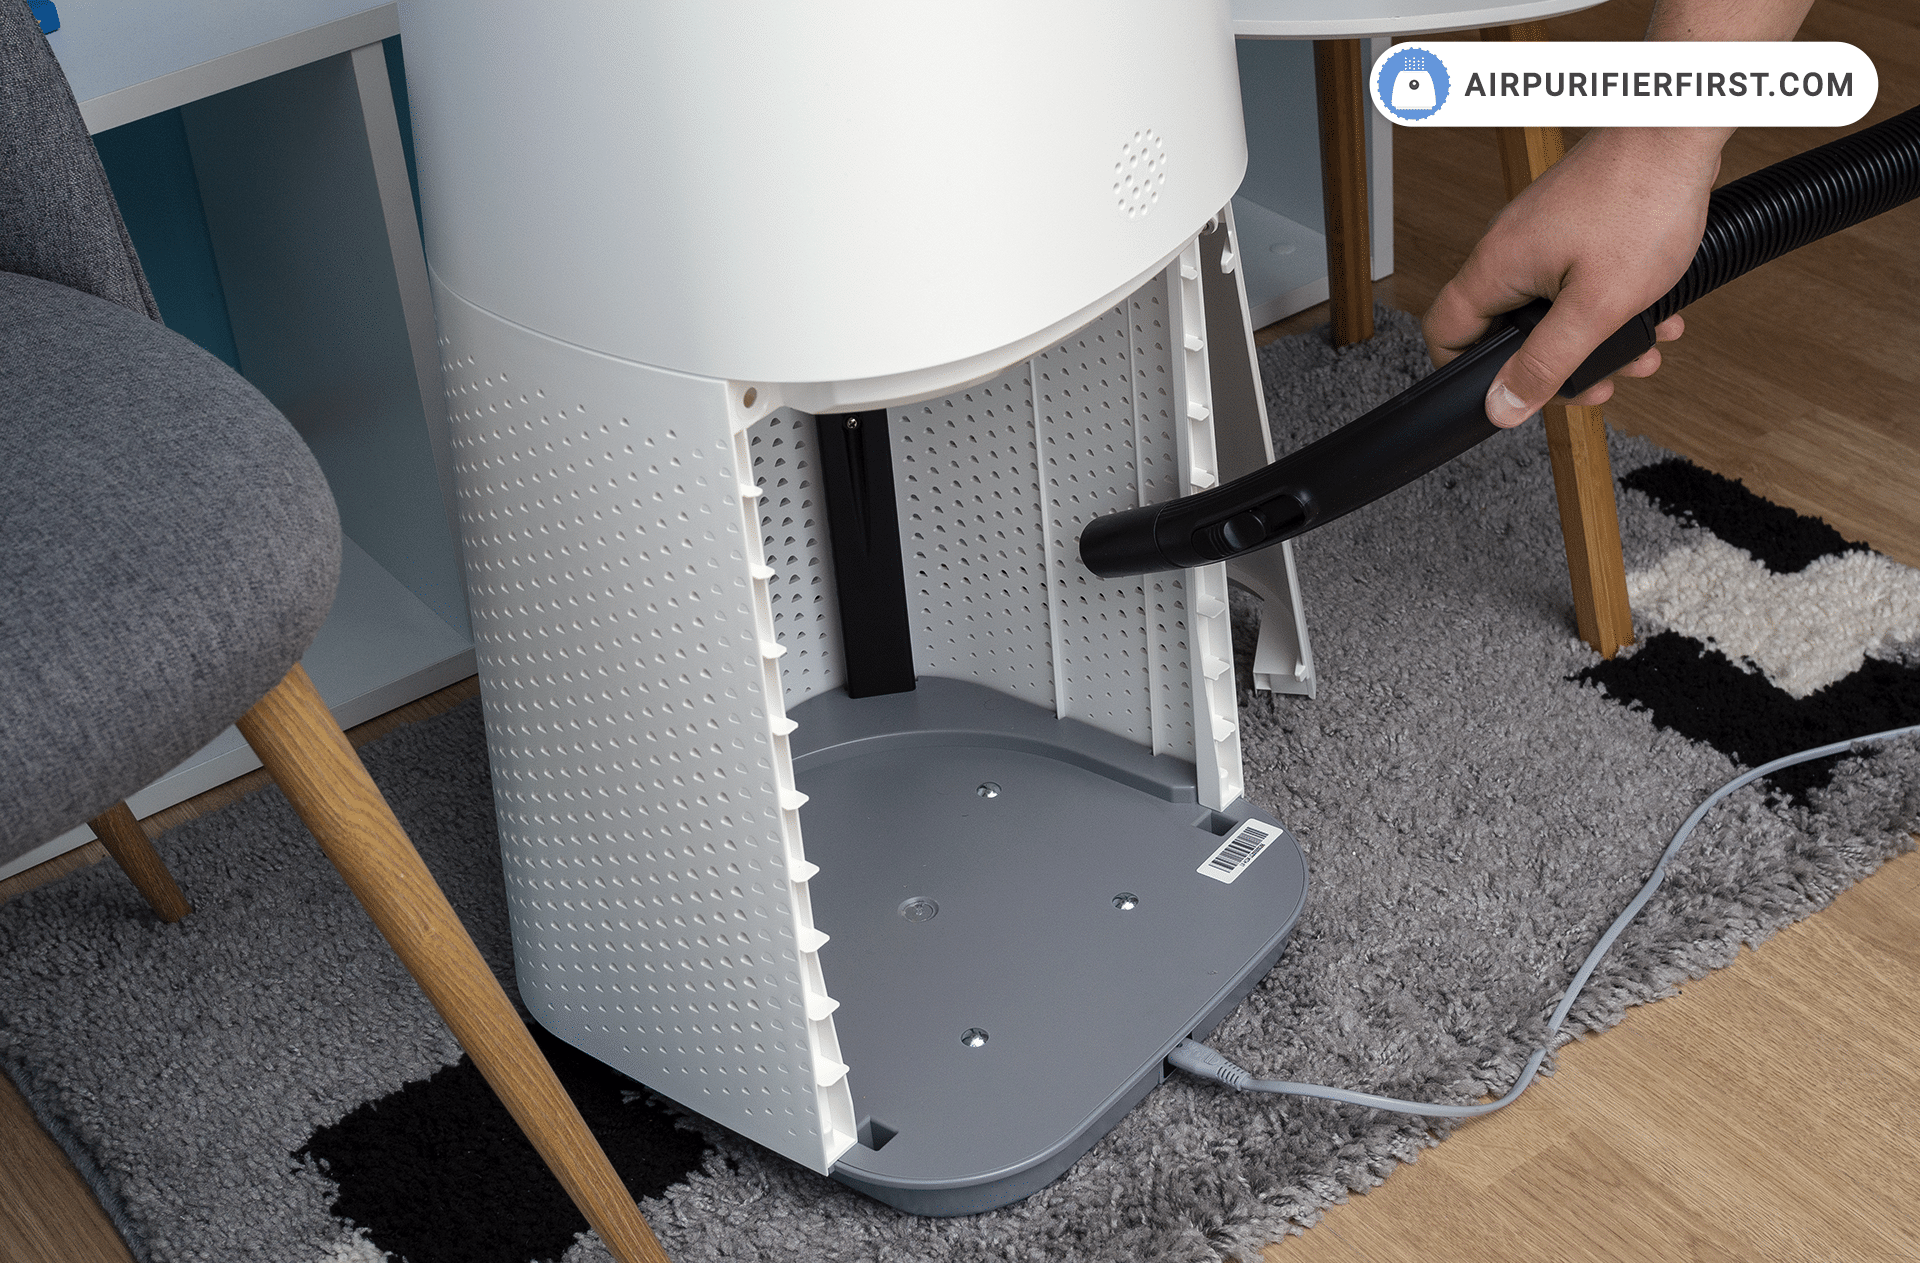 Vacuuming inside of air purifier